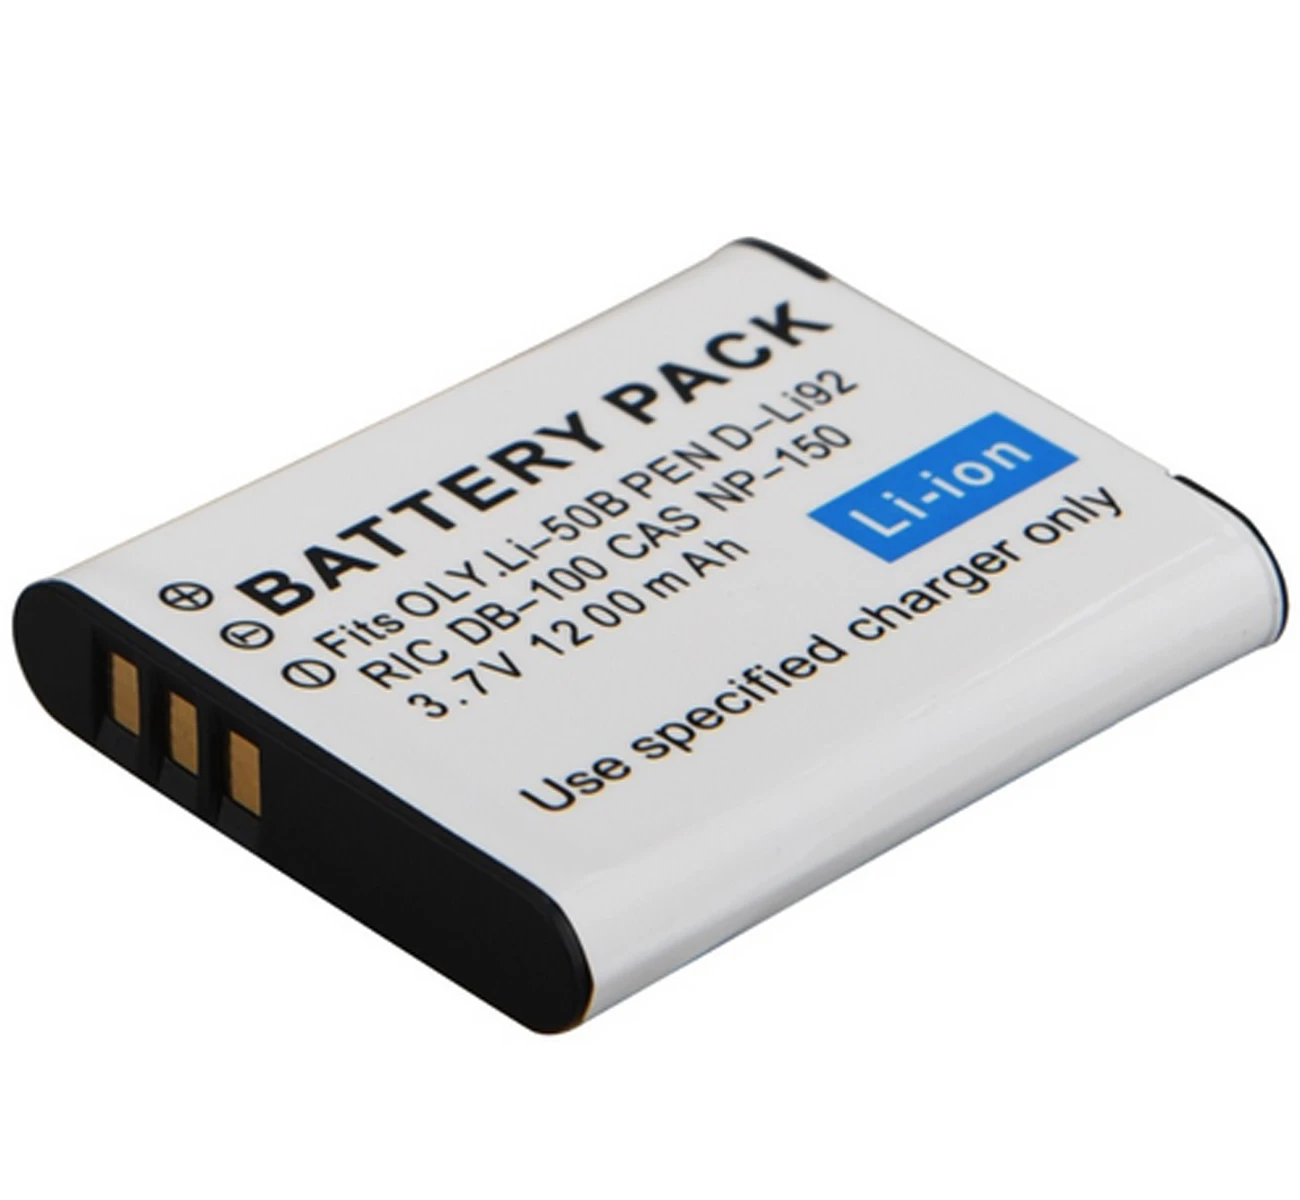 gids Net zo shit Battery Pack for Olympus Stylus Tough TG 610, TG 620, TG 630 iHS, TG630,  TG830 iHS, TG850, TG860, TG870 Digital Camera|Digital Batteries| -  AliExpress